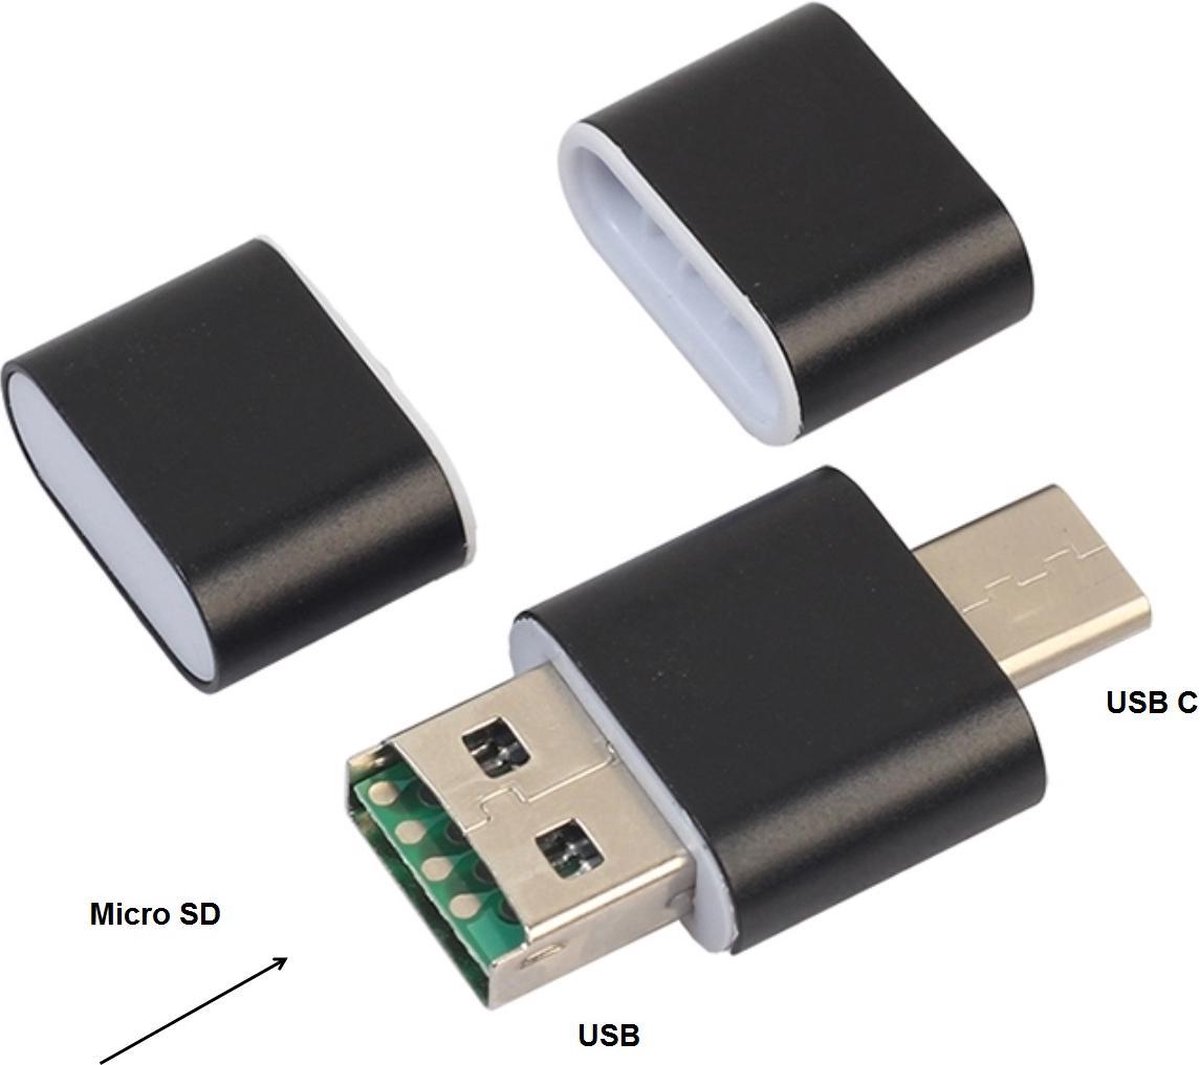 Lecteur de carte Micro SD USB vers USB C - Adaptateur Mini USB vers USB C  avec lecteur